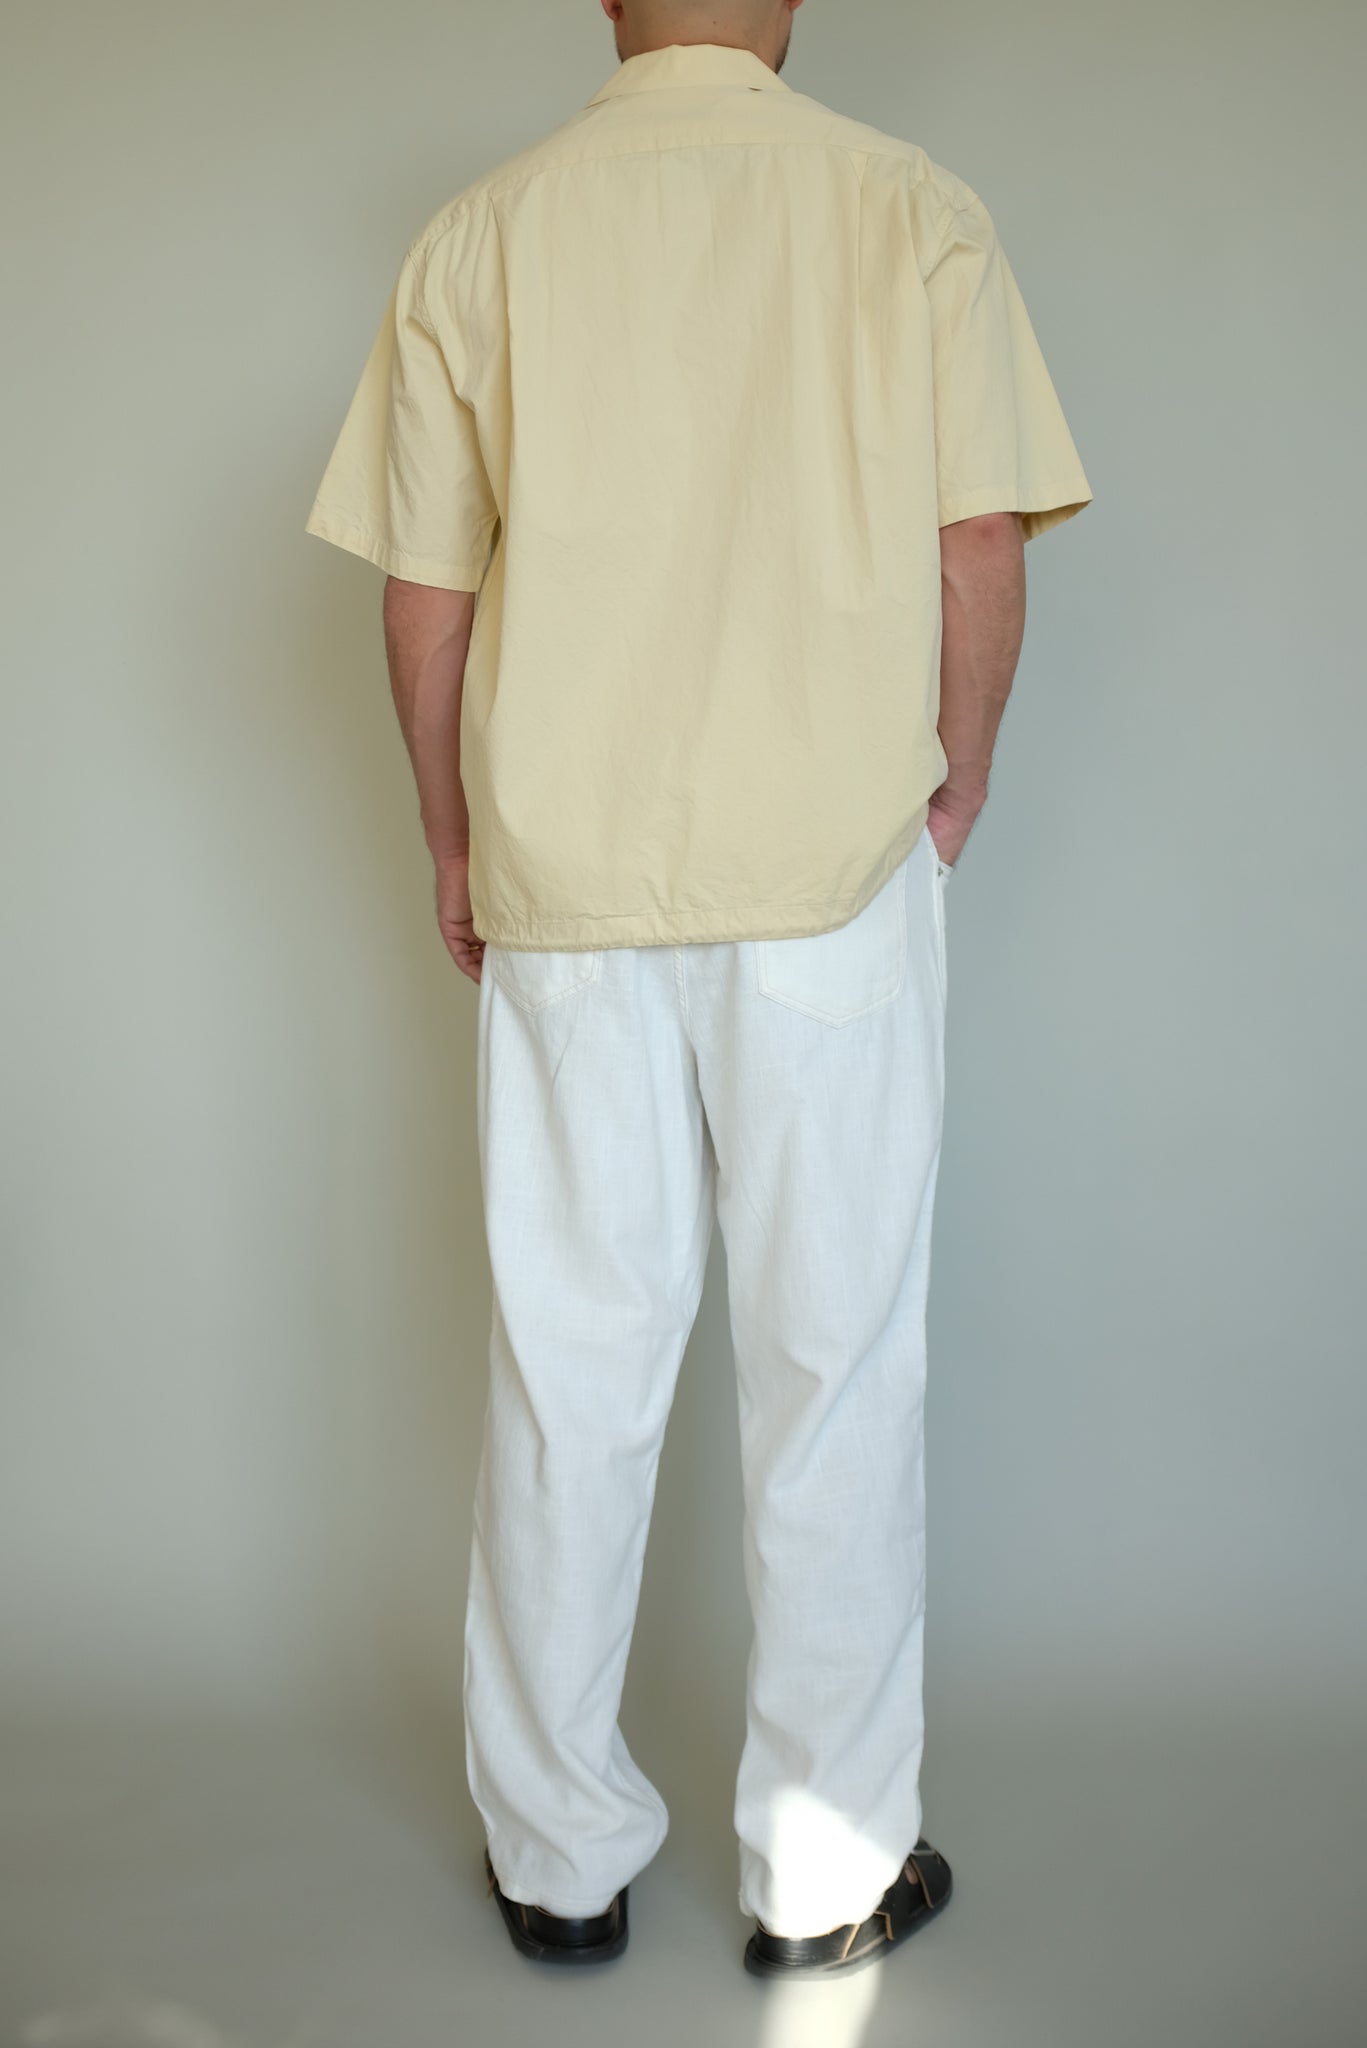 Convertible Collar Shirt in Yellow Cream